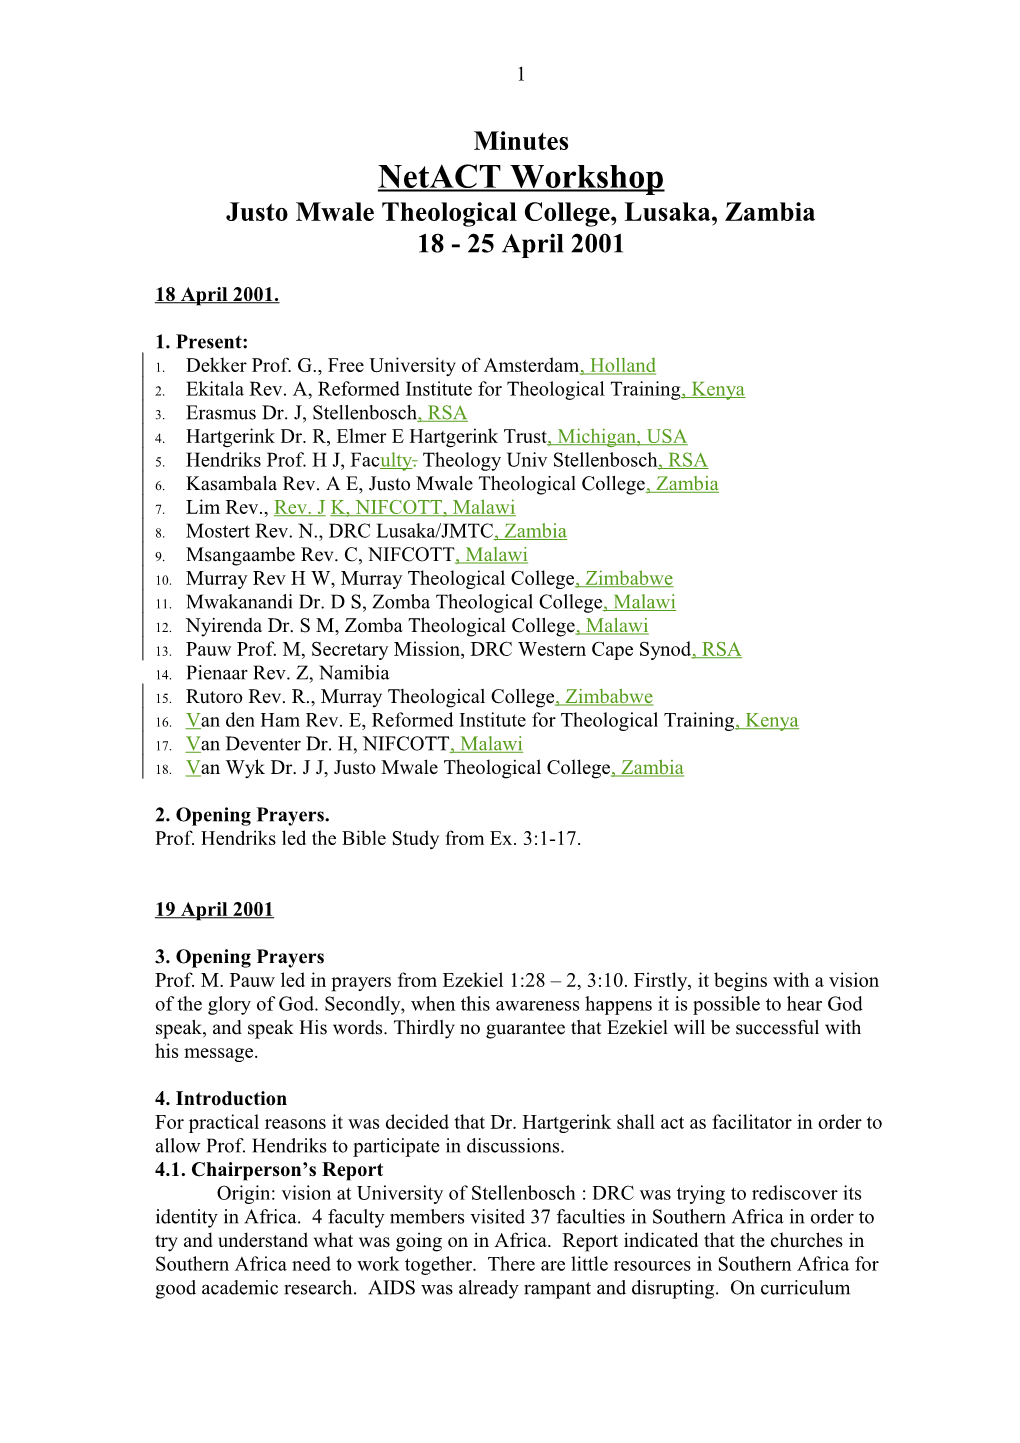 Minutes of Netact Workshop 18- 25 April 2001